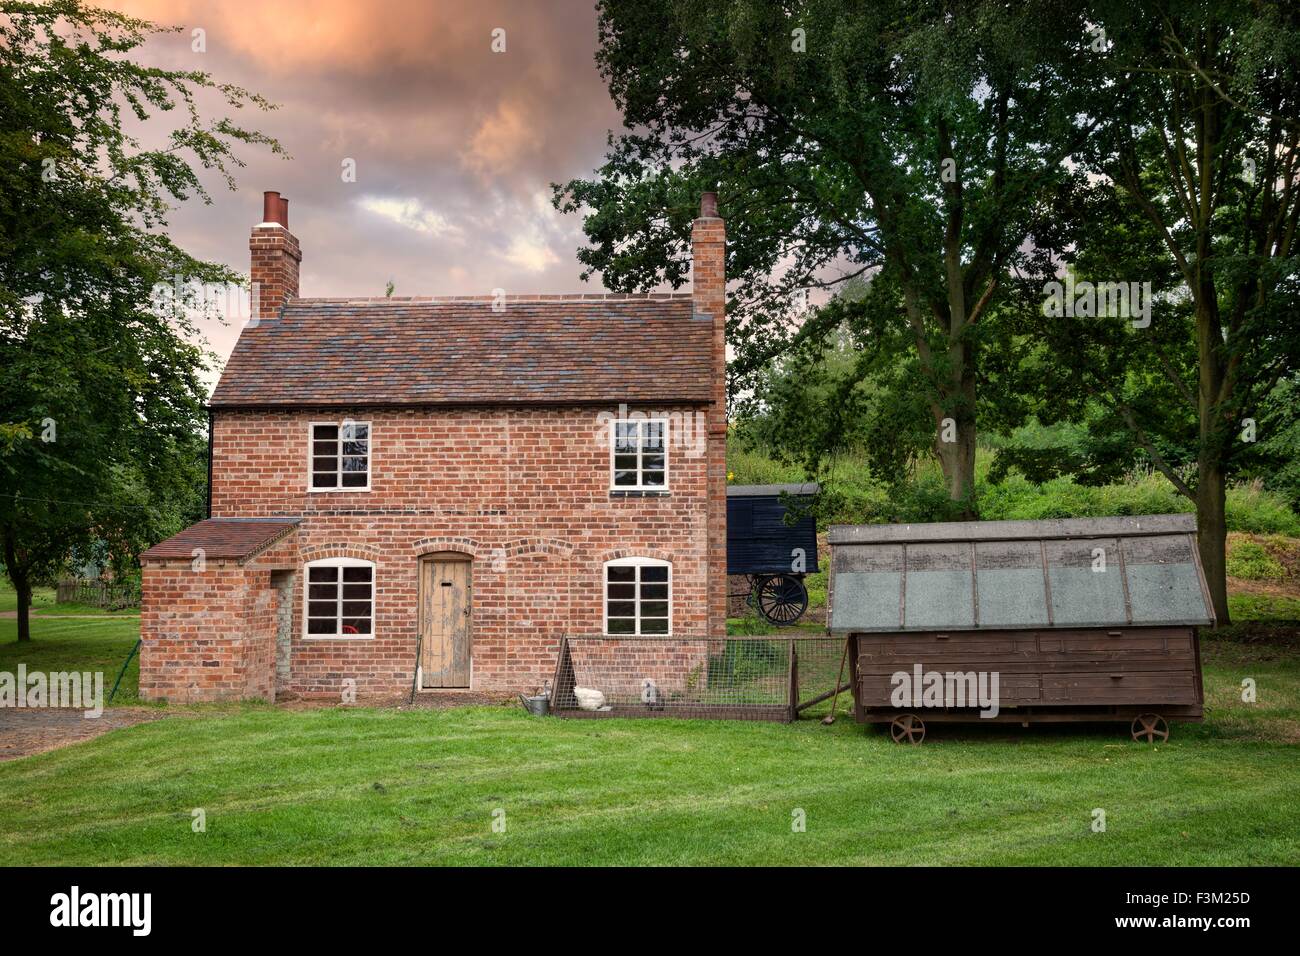 Brick cottage with chicken run, England. Stock Photo